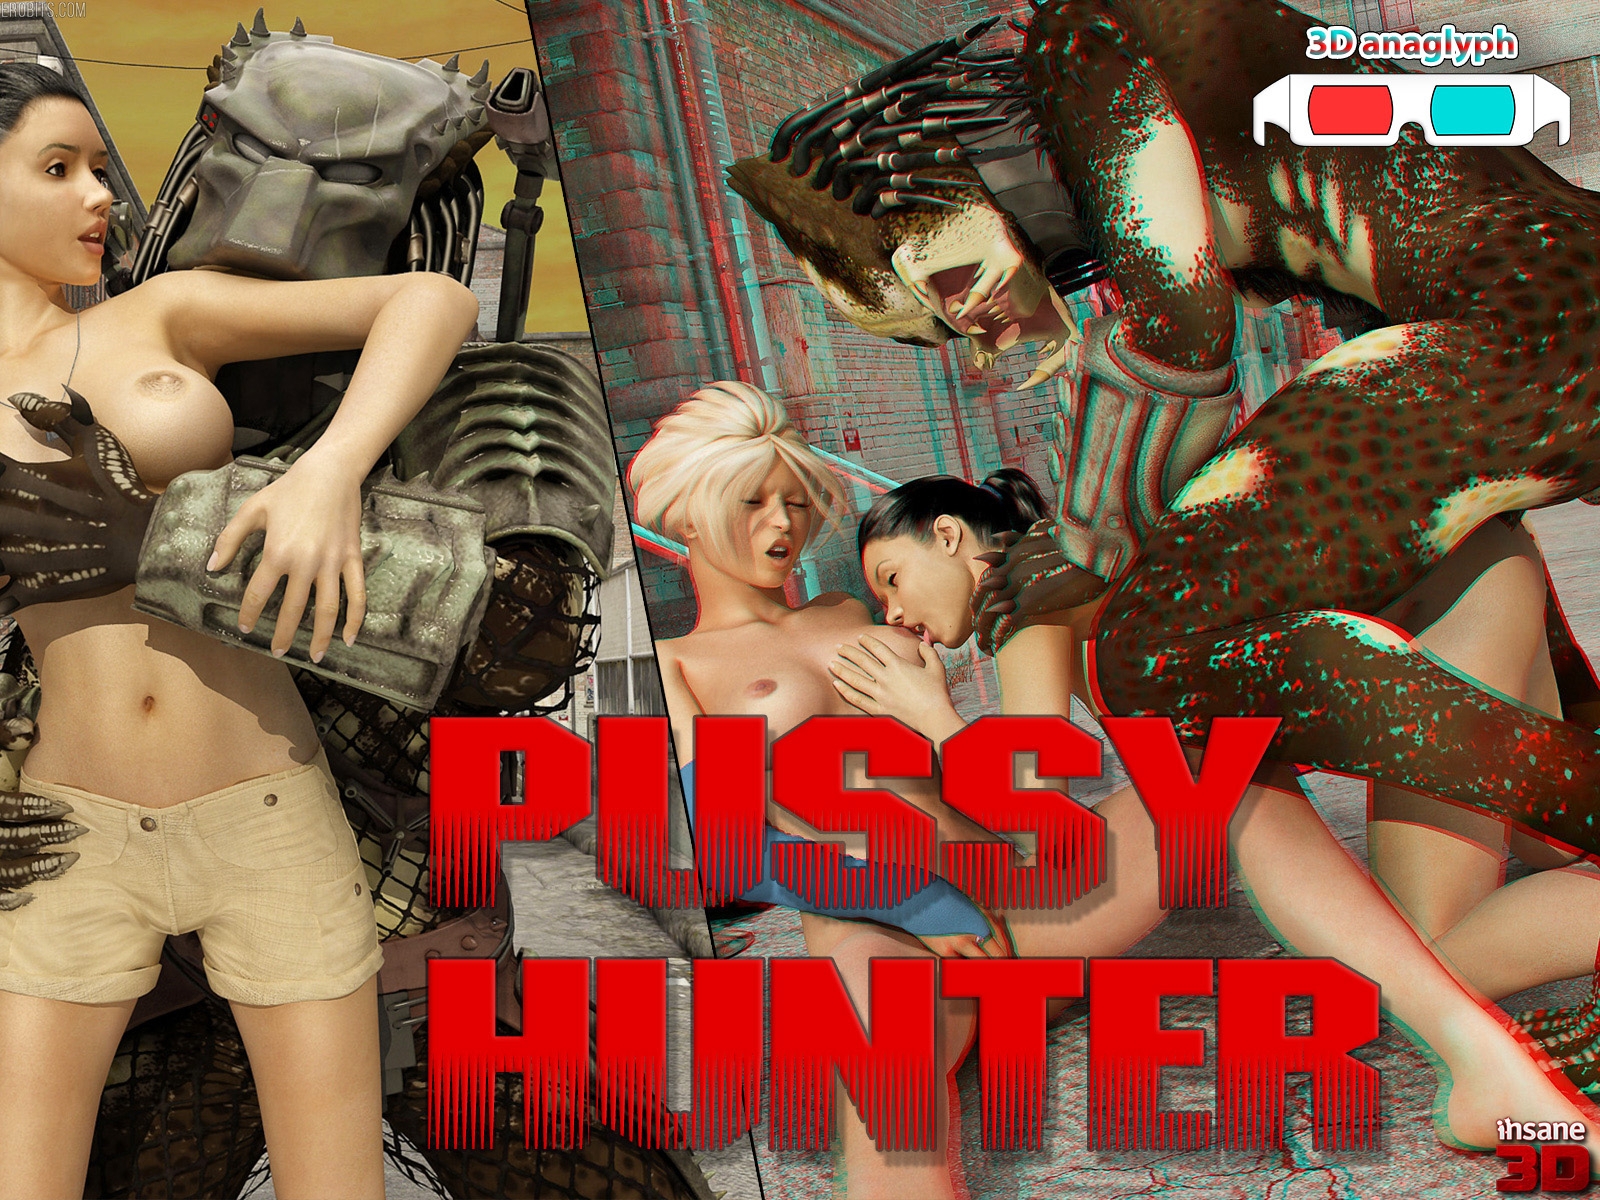 Pussy Hunter 👉 https://erobits.com/parody/pussy-hunter.html 👈